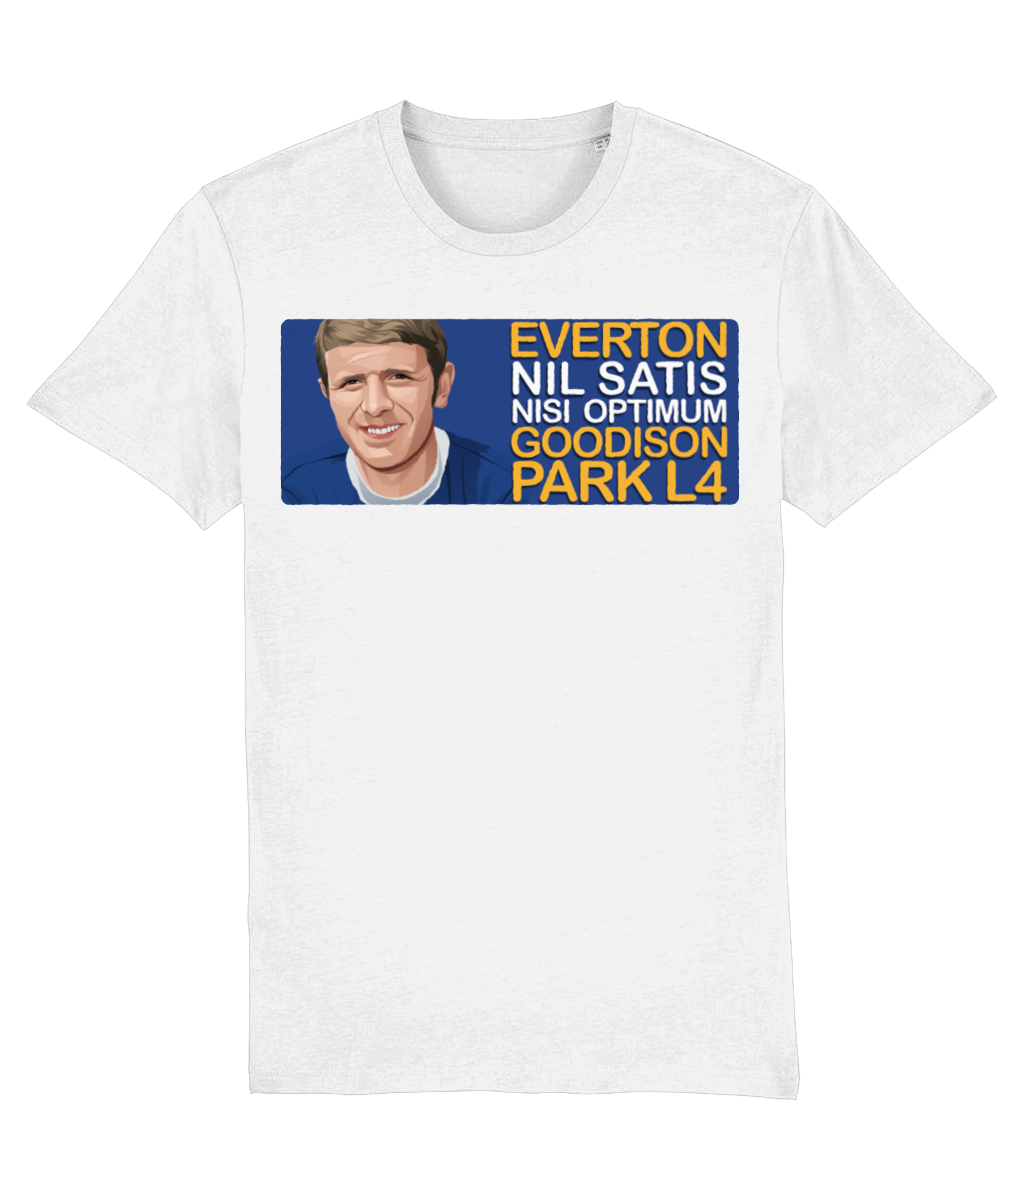 Everton Brian Labone Goodison Park L4 Unisex T-Shirt